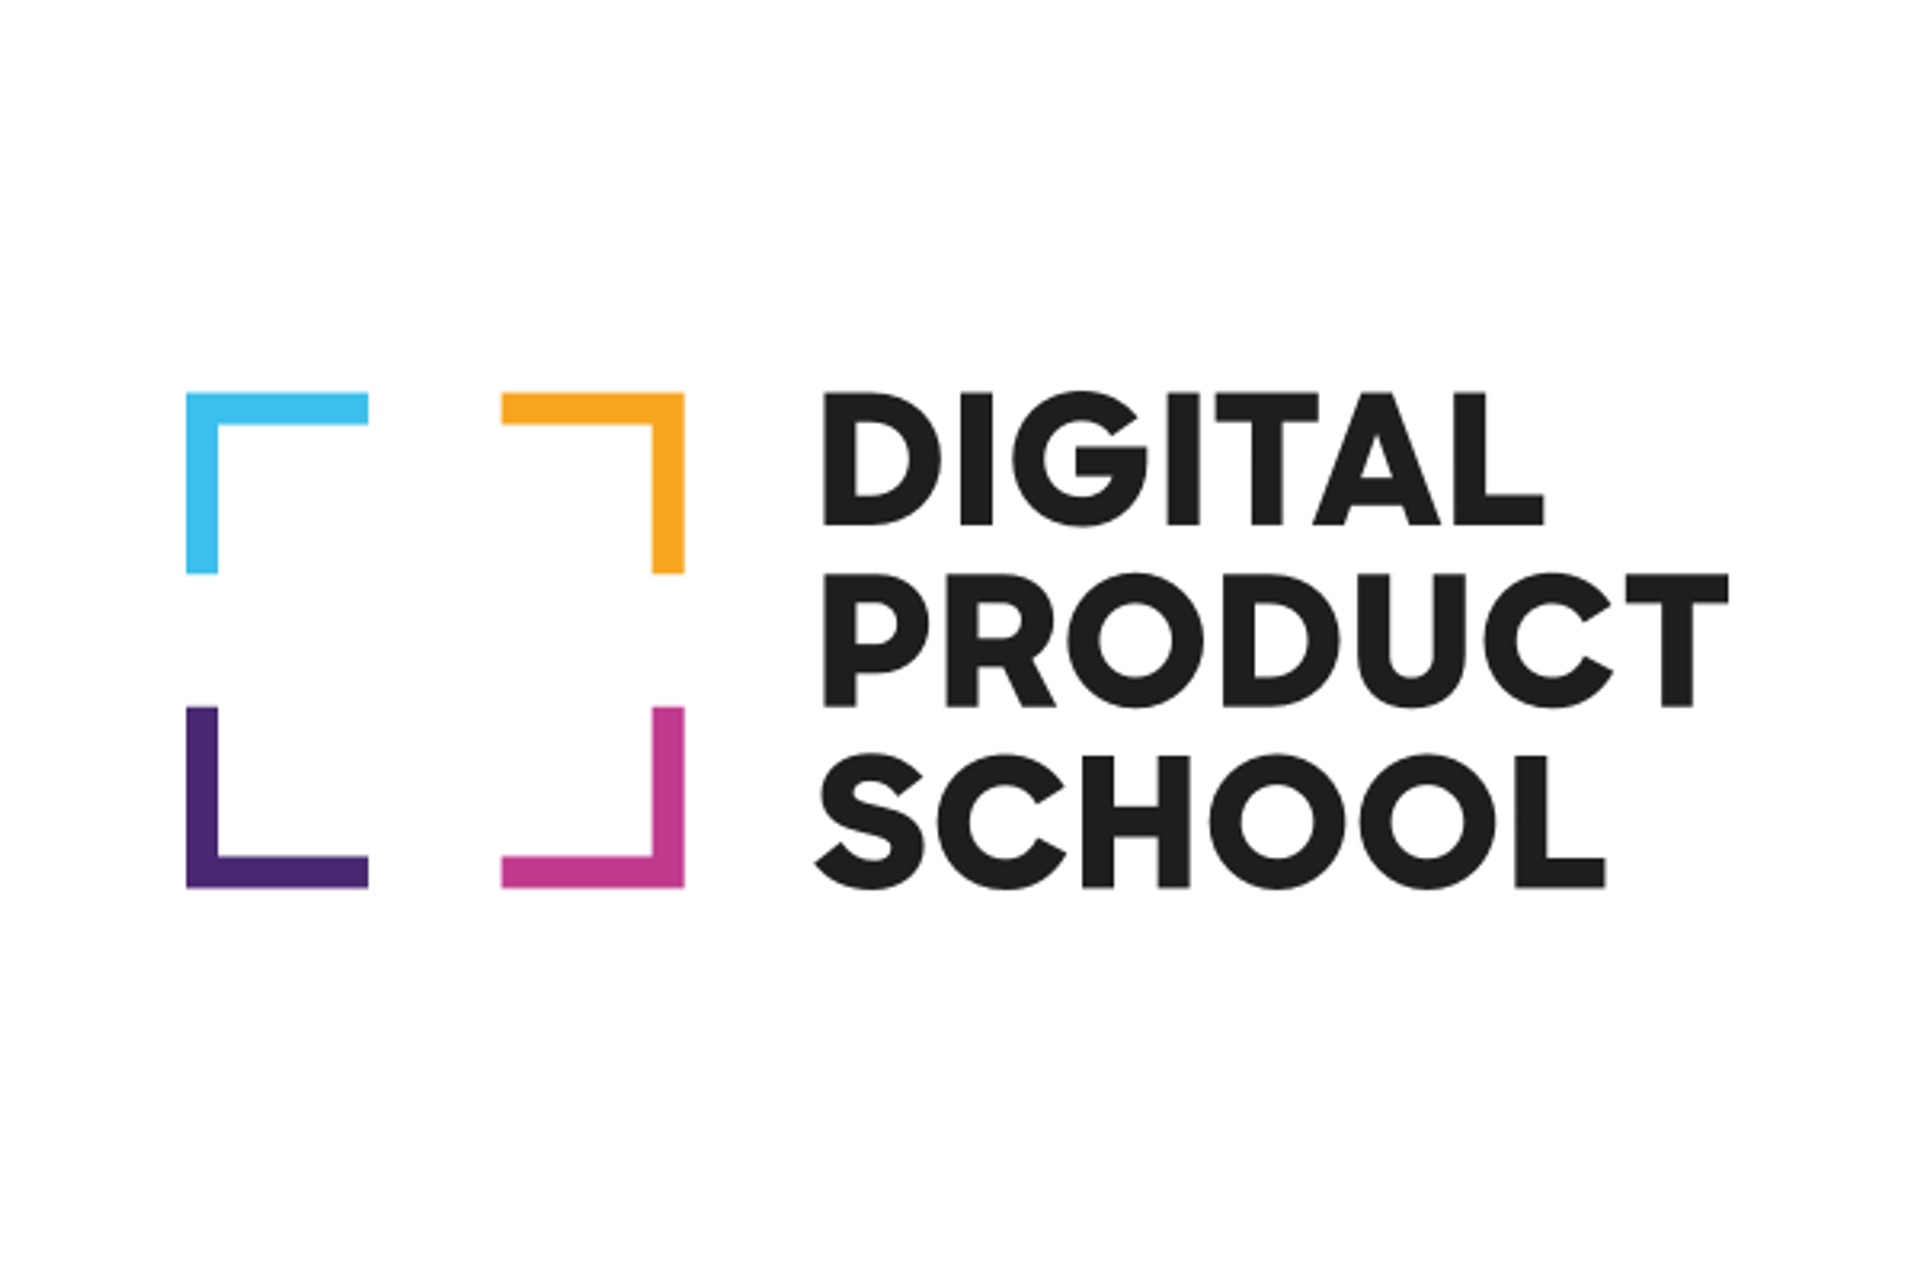 Digital product school